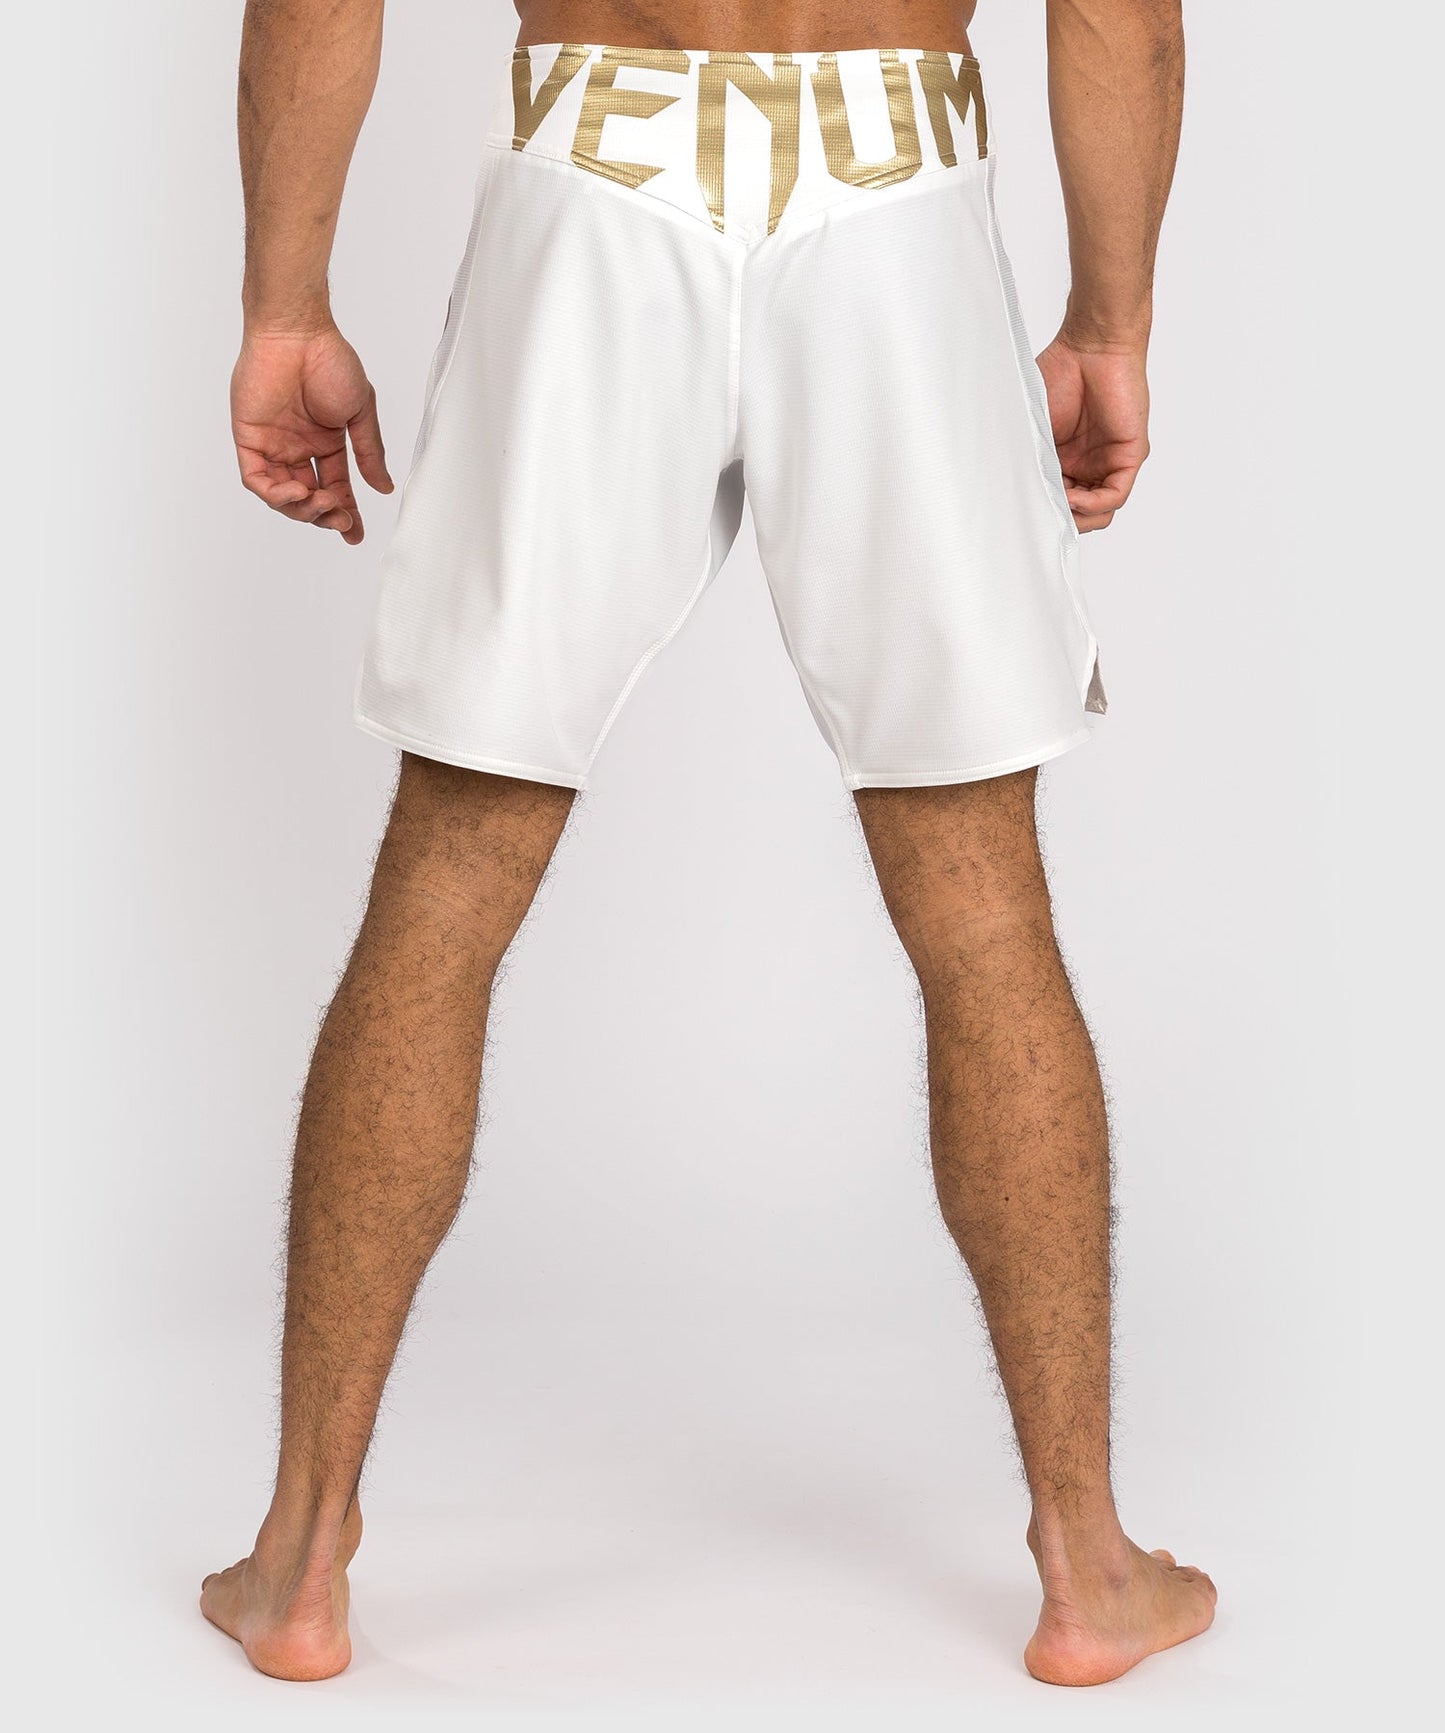 Shorts de combat Venum Light 5.0 - Blanc/Or